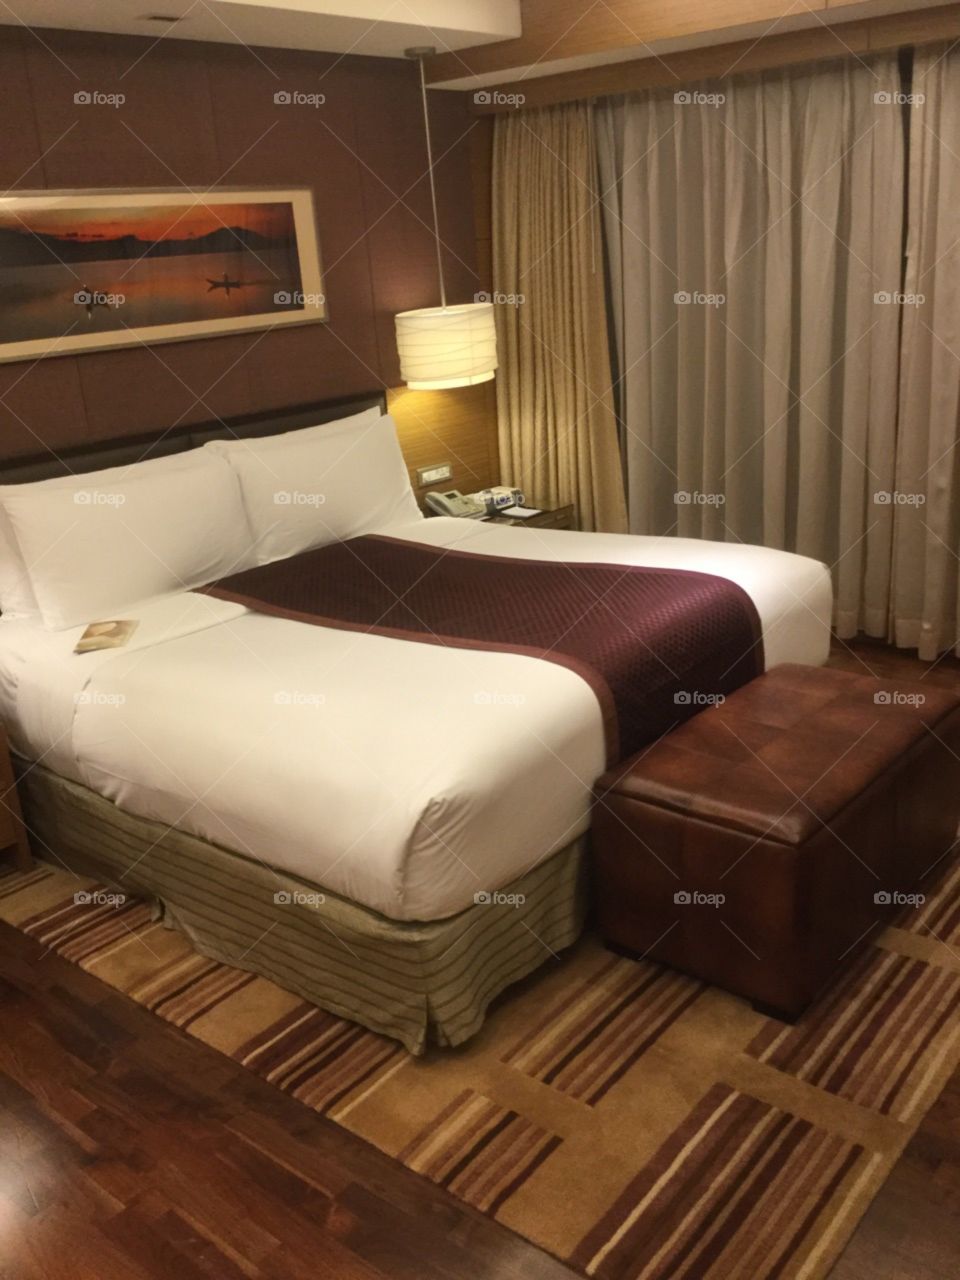 Hotel room 